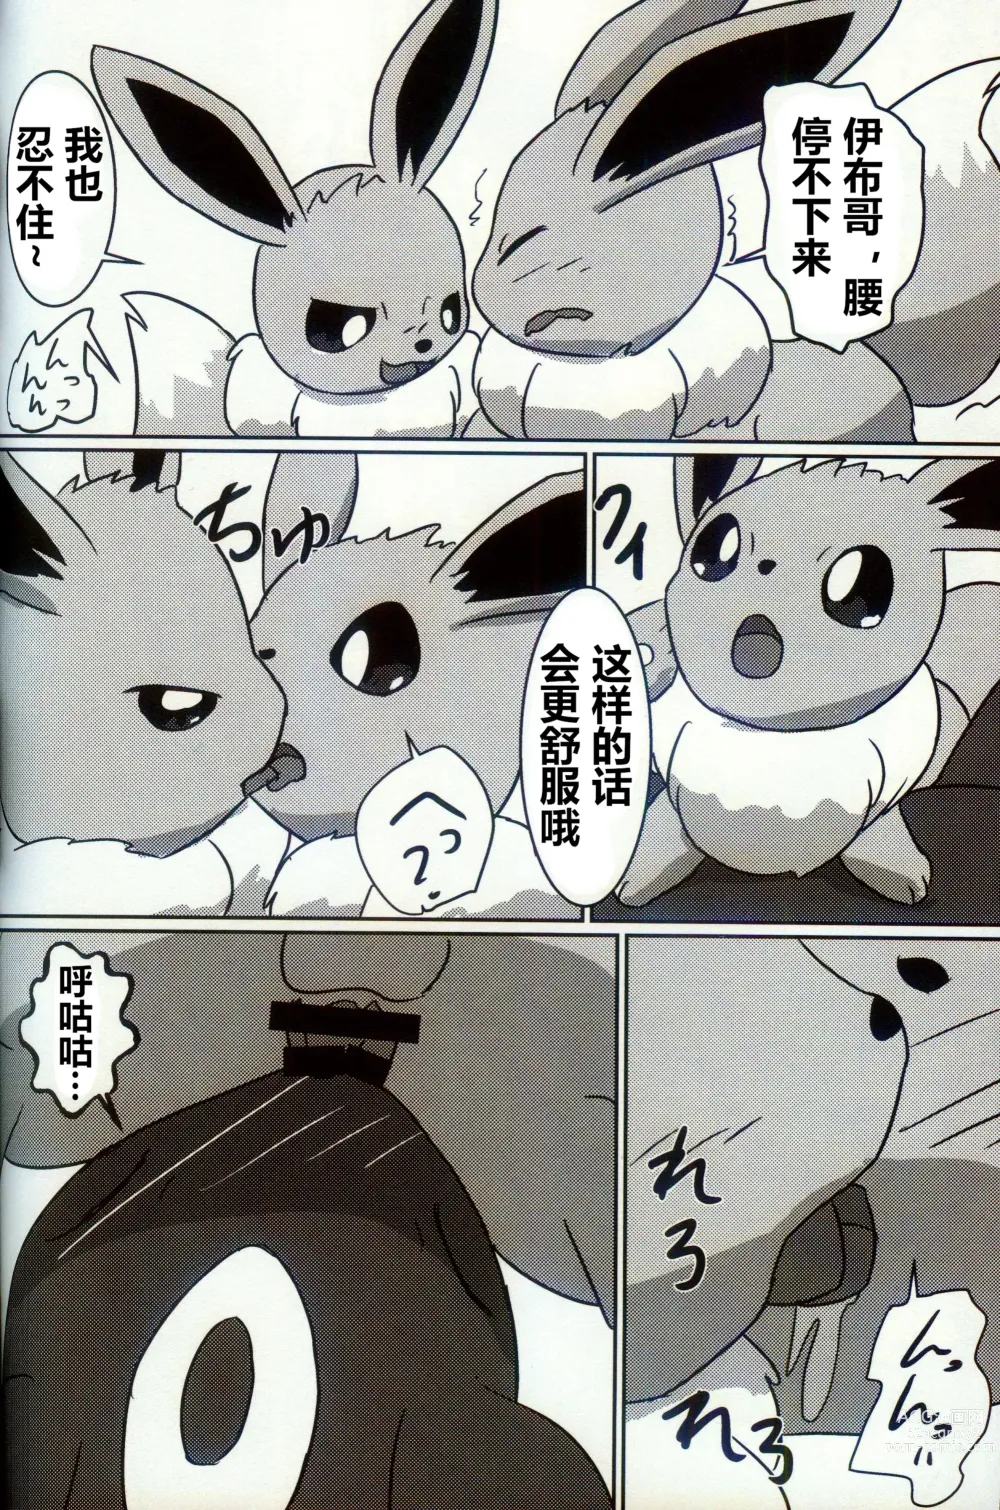 Page 18 of doujinshi 被拜托照顾附近的双胞胎发生了不得了的事...